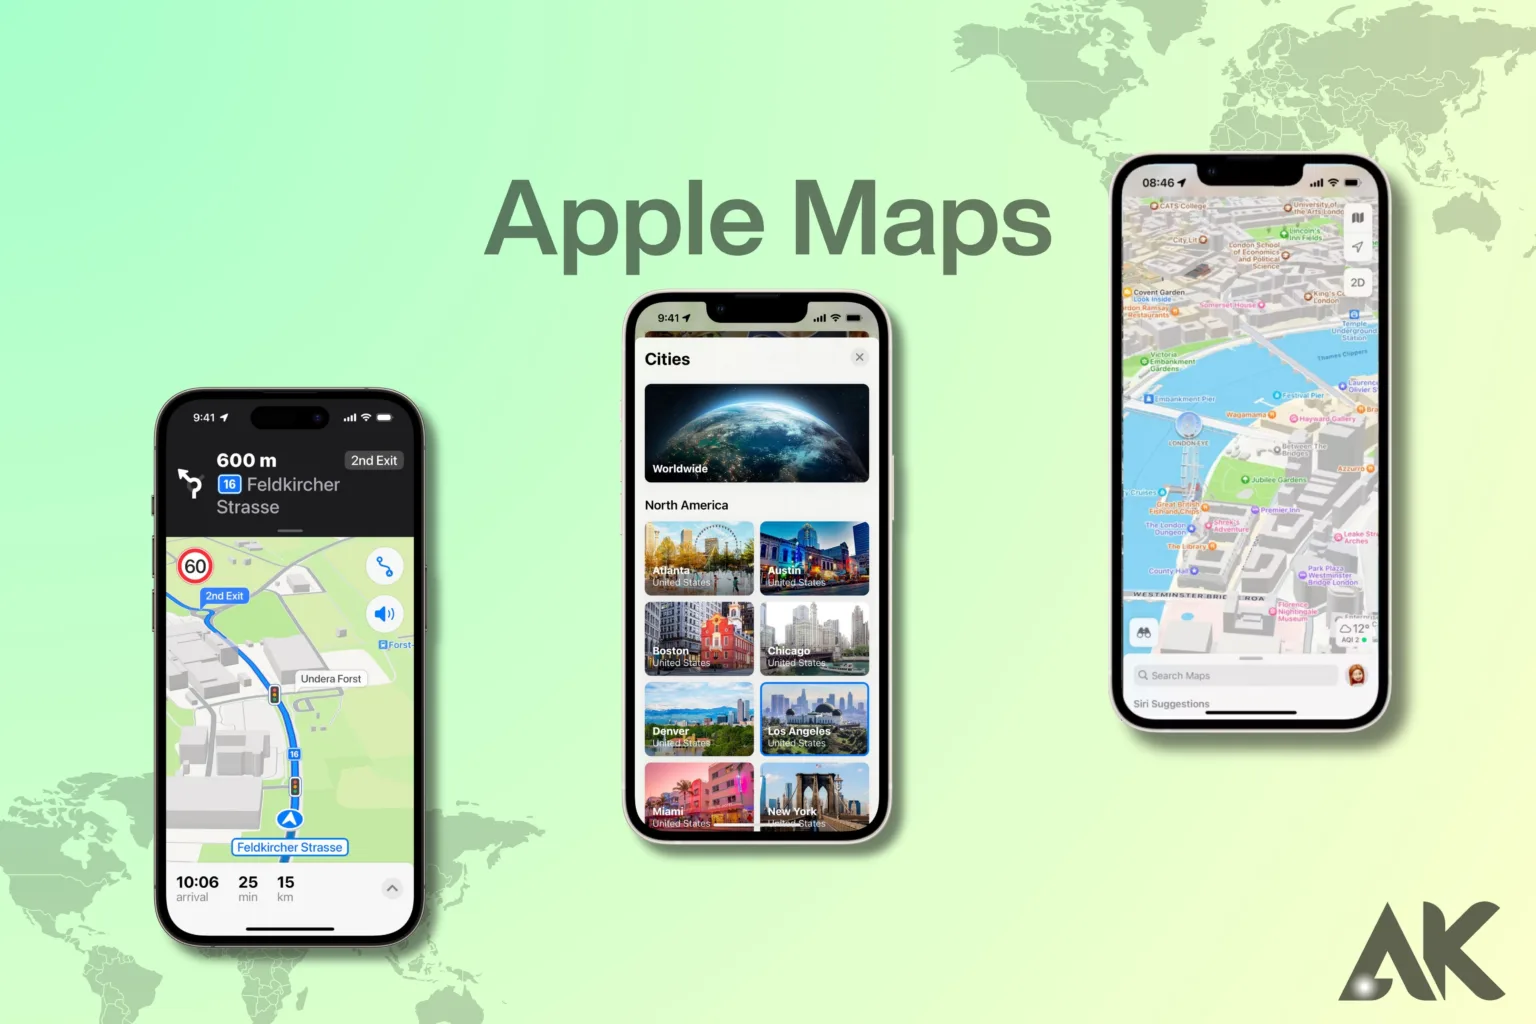 Apple Maps navigation